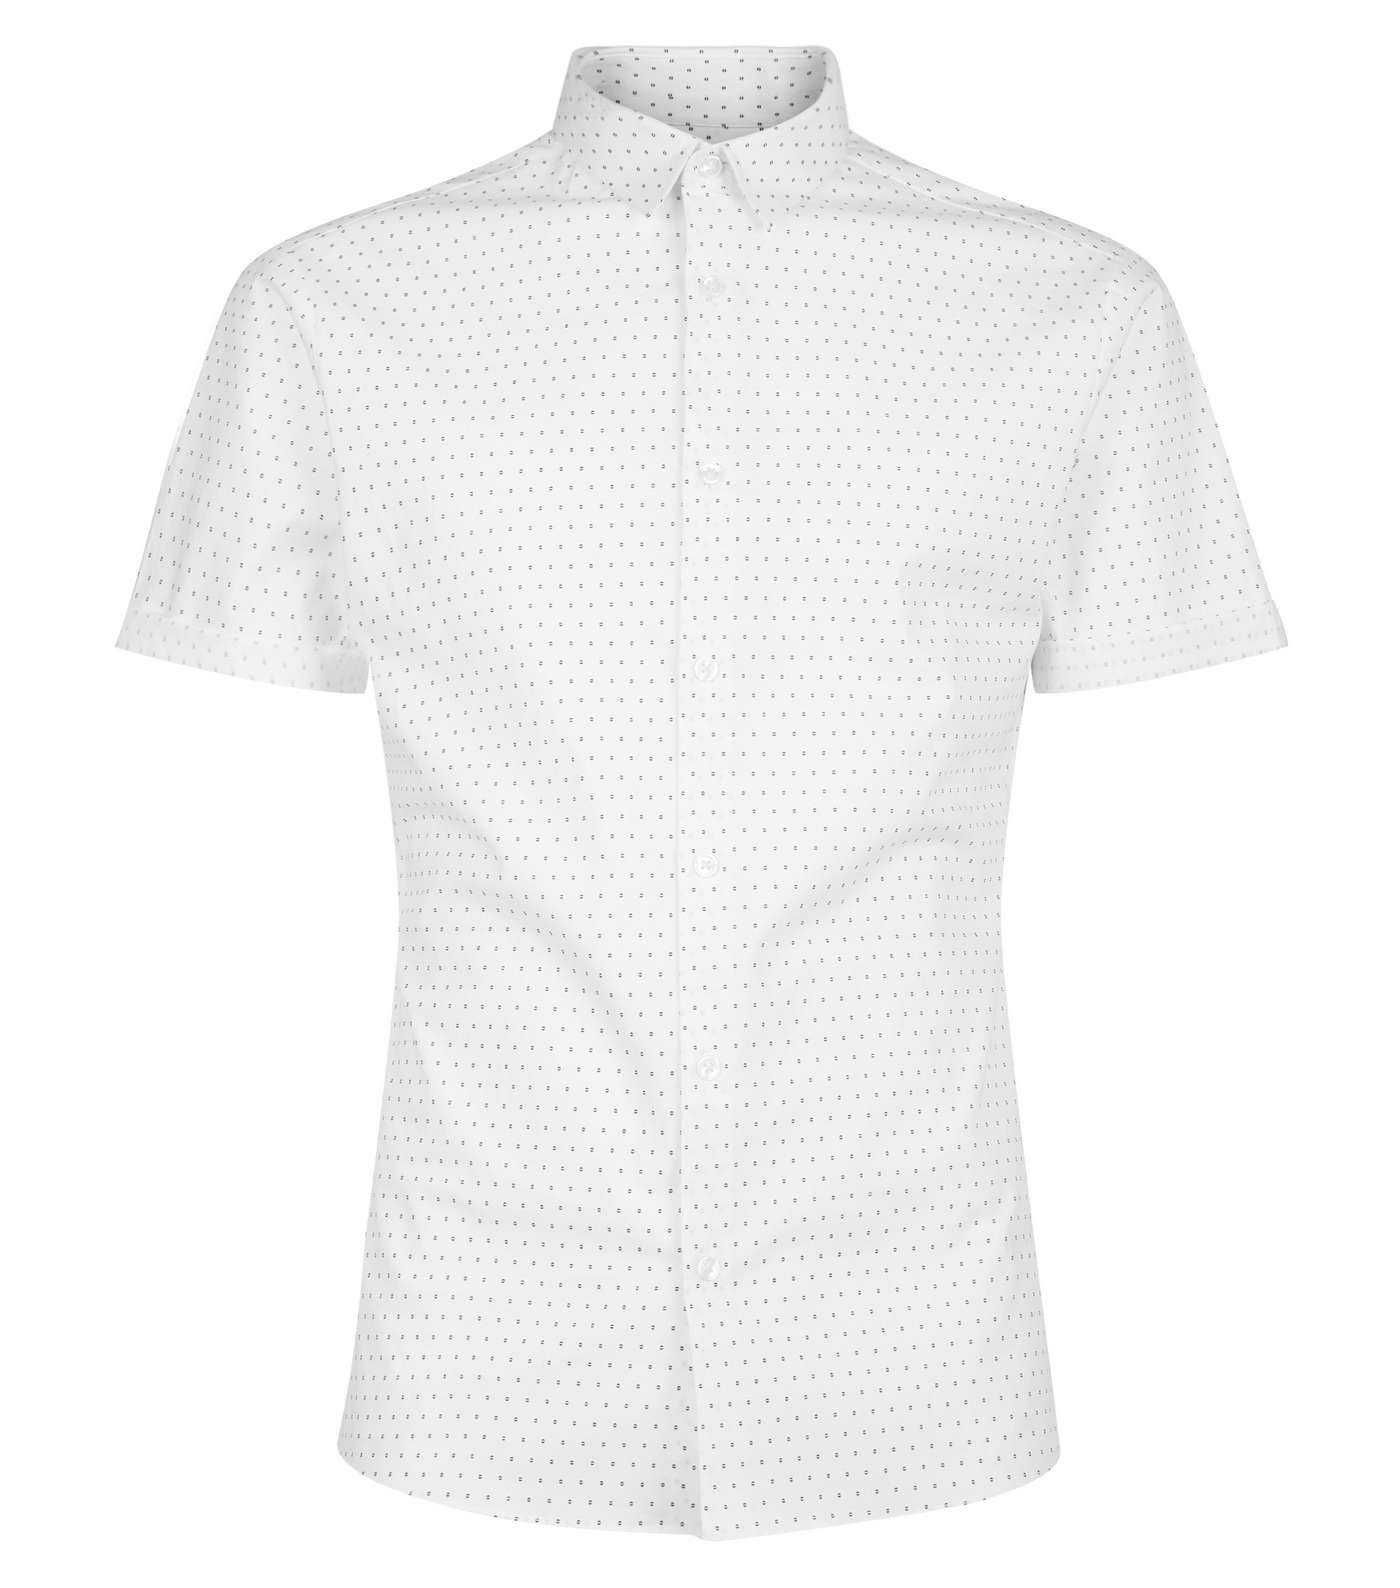 White Polka Dot Muscle Fit Poplin Shirt Image 4